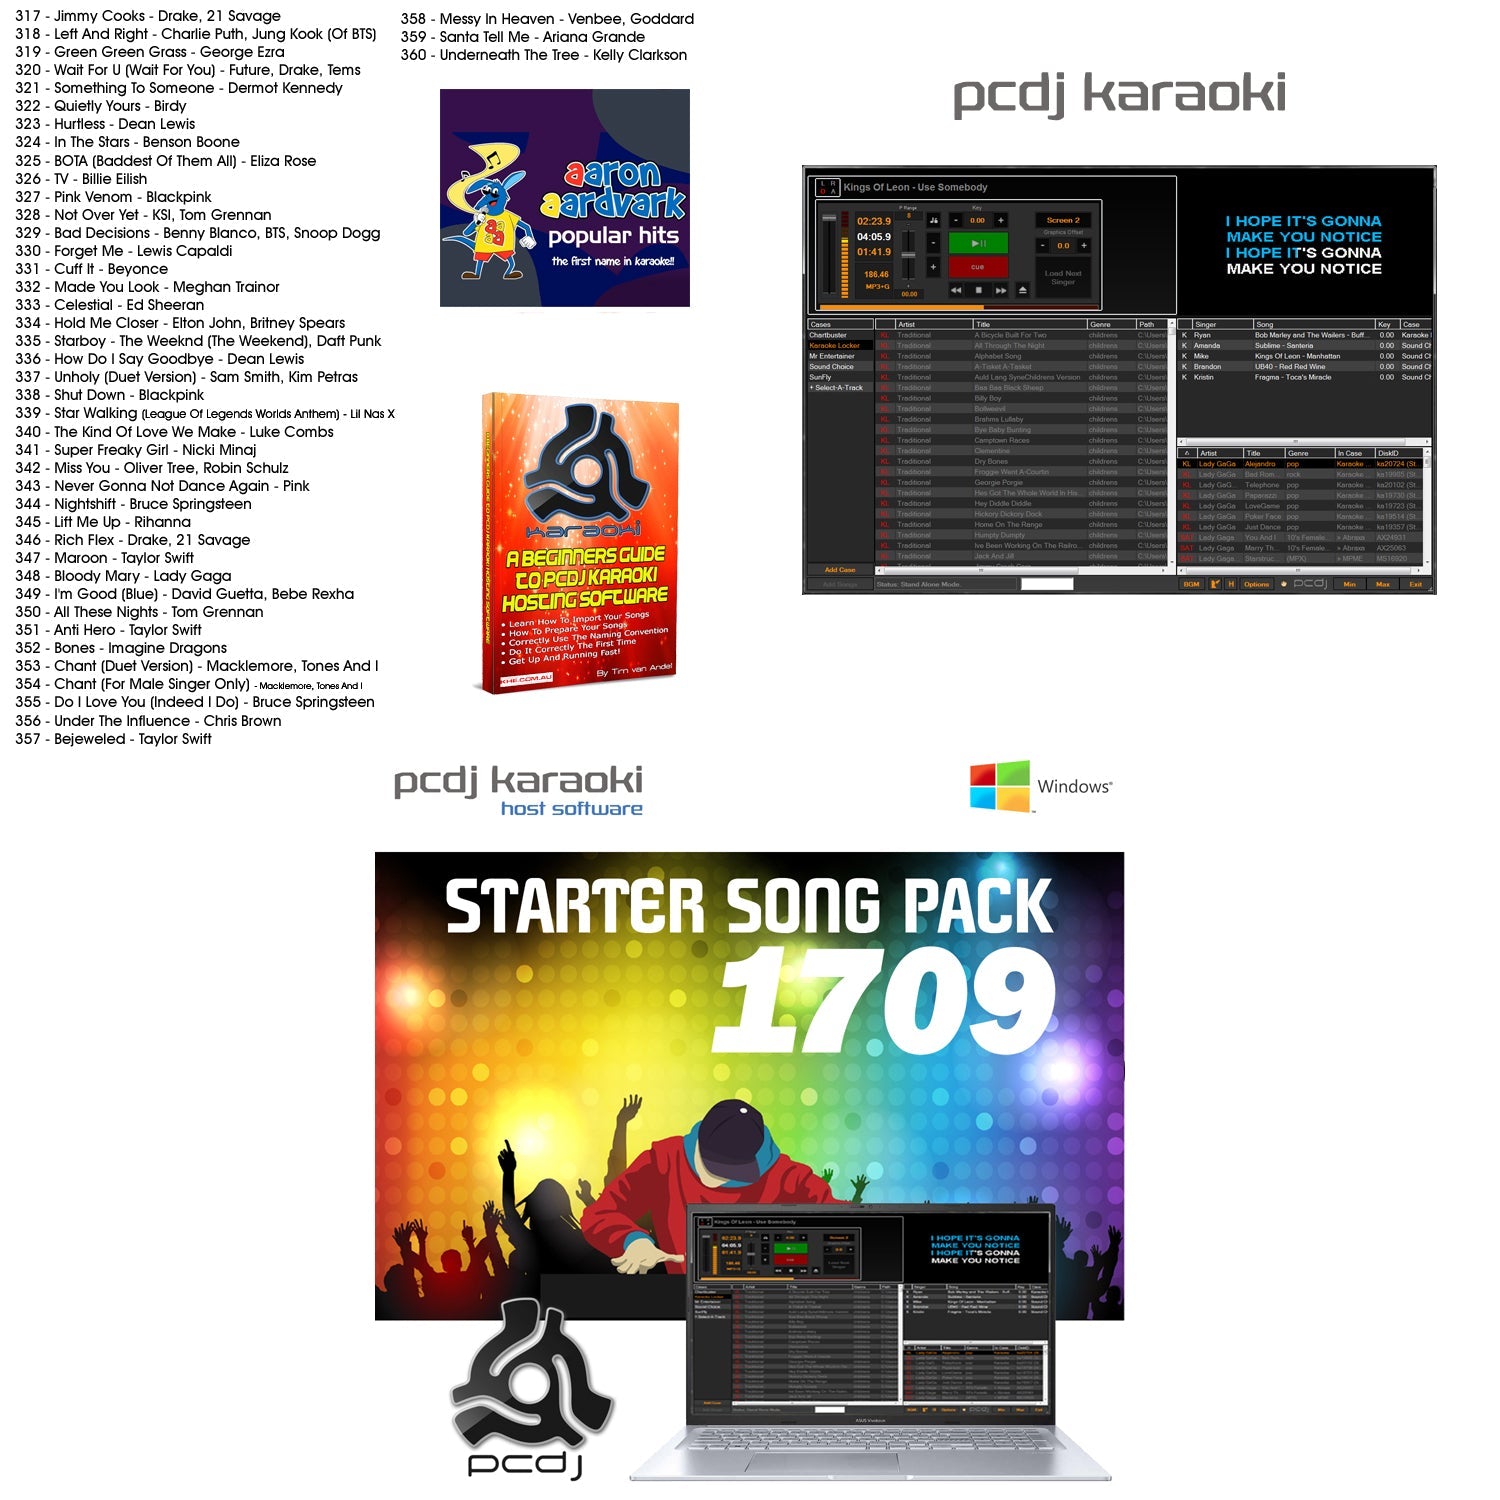 PCDJ Karaoki Hosting Software + 1709 Song Pack - Karaoke Home Entertainment